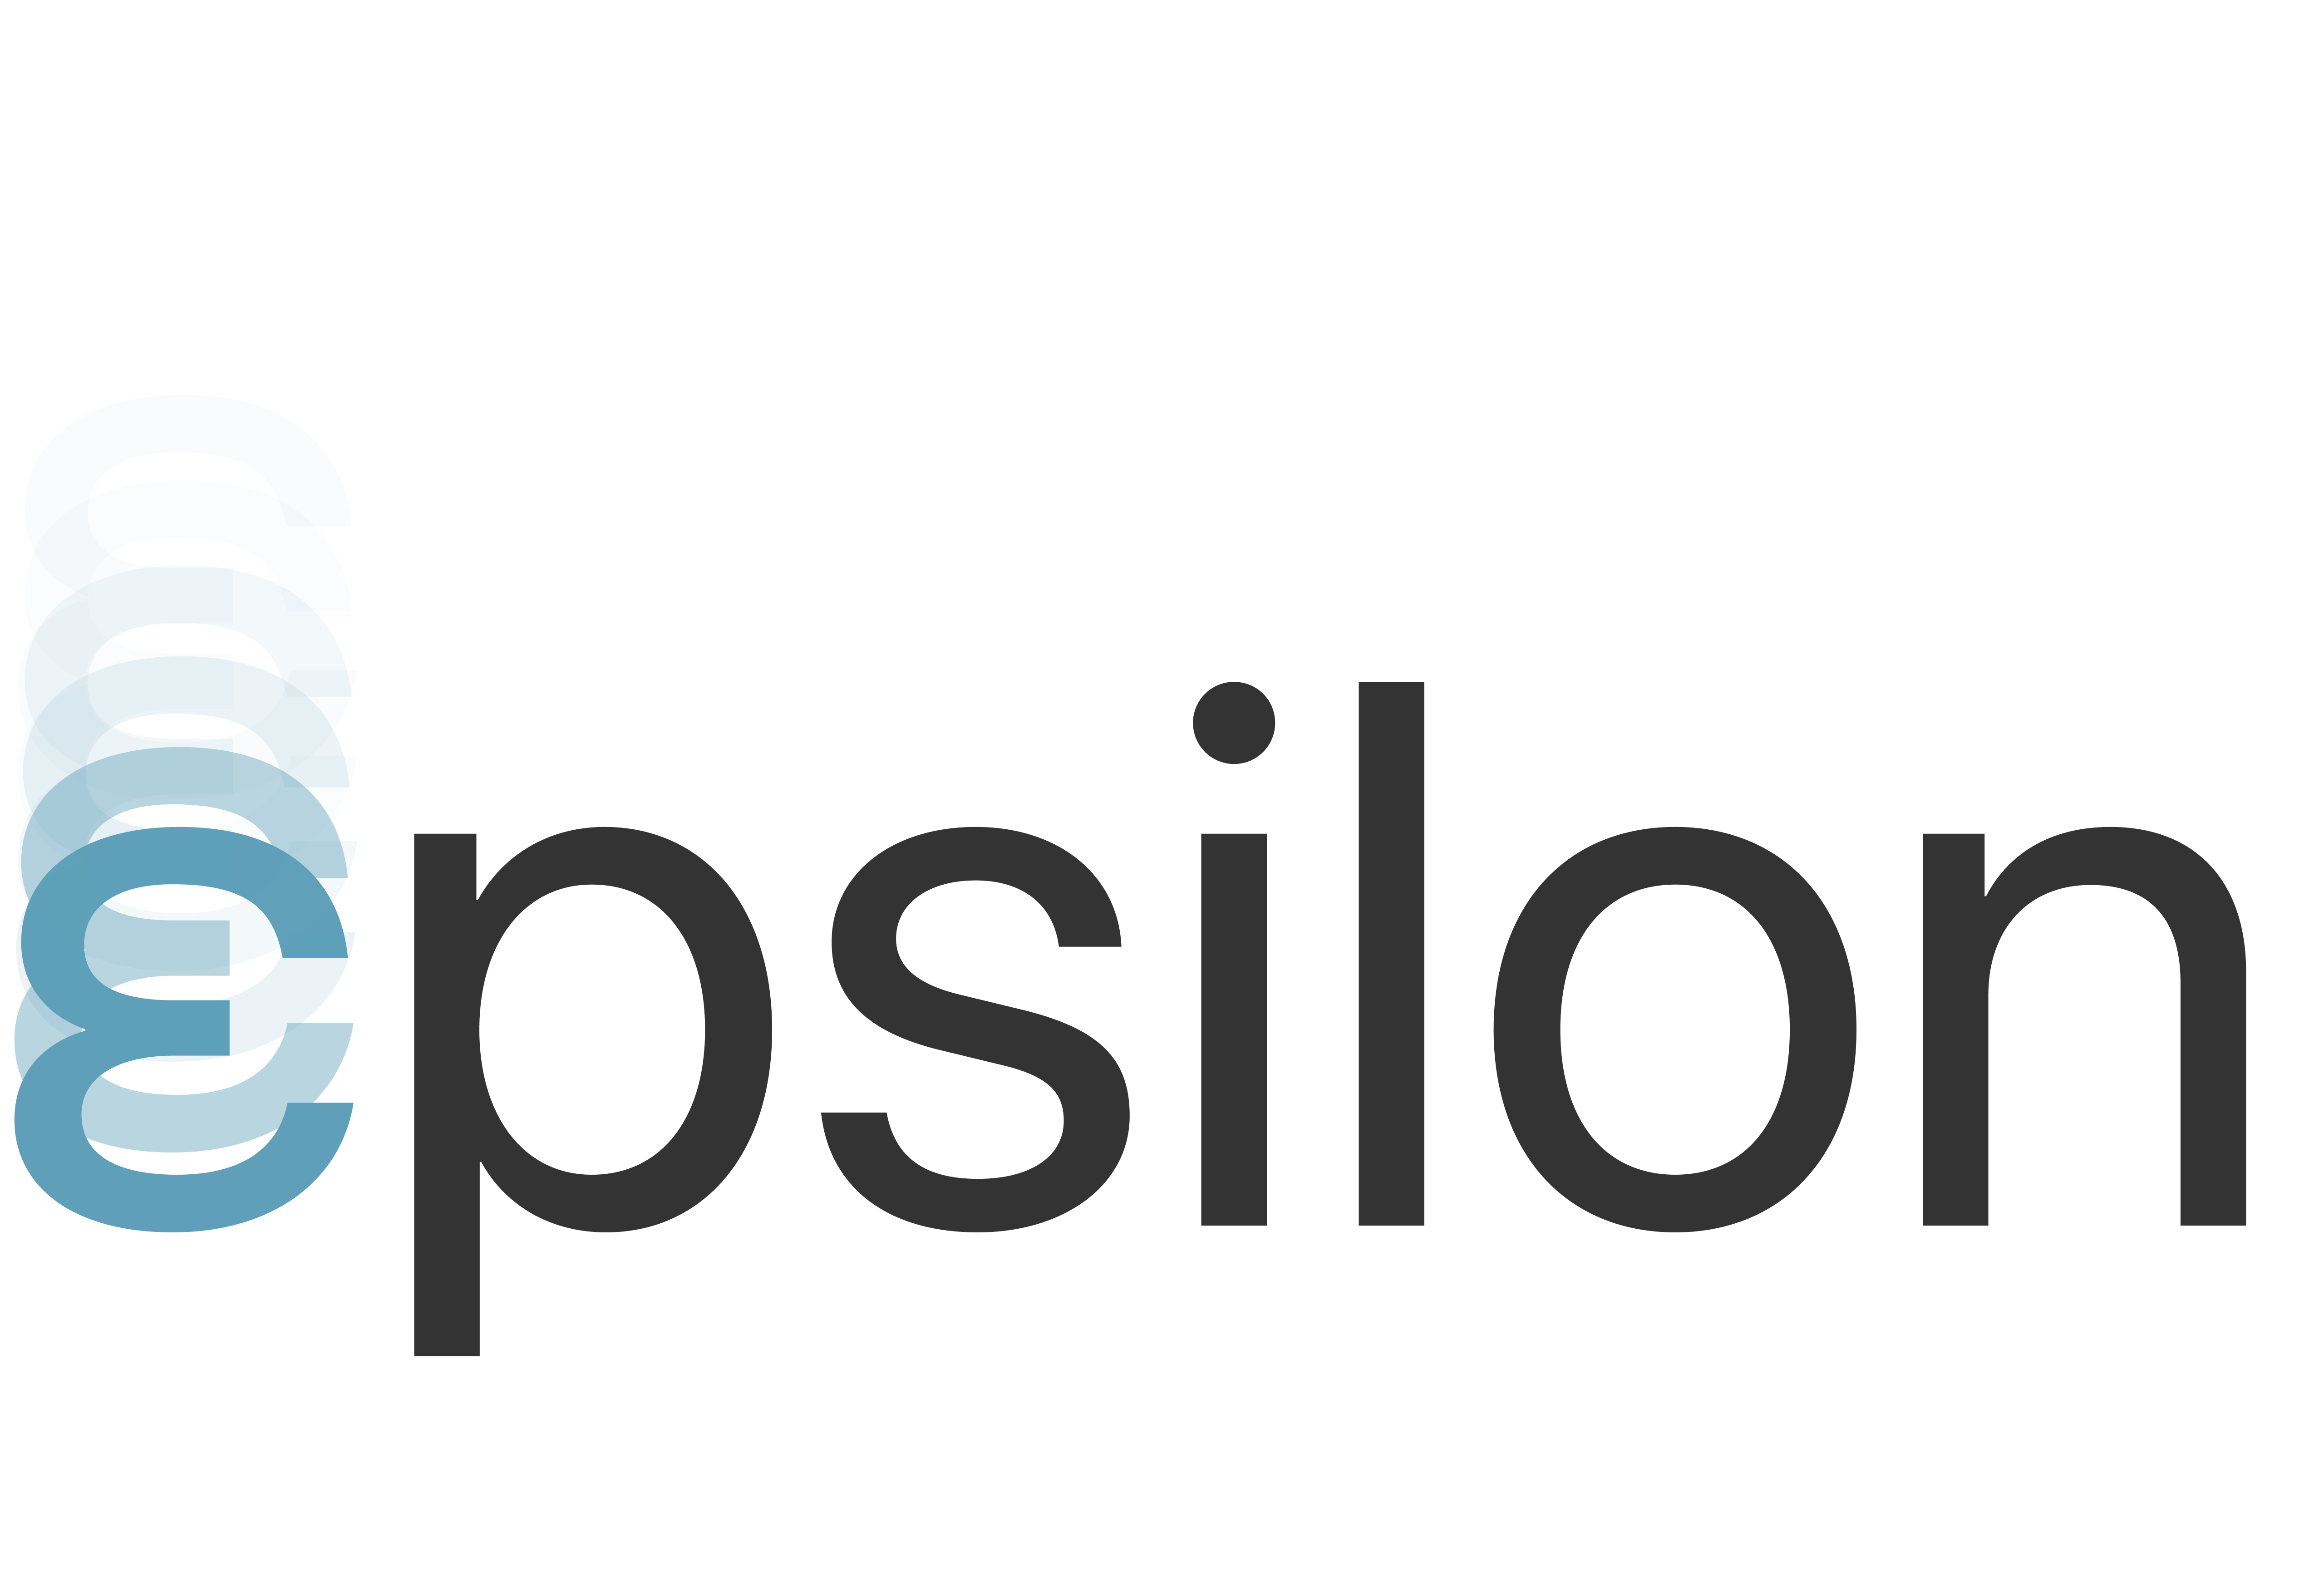 Epsilon Project